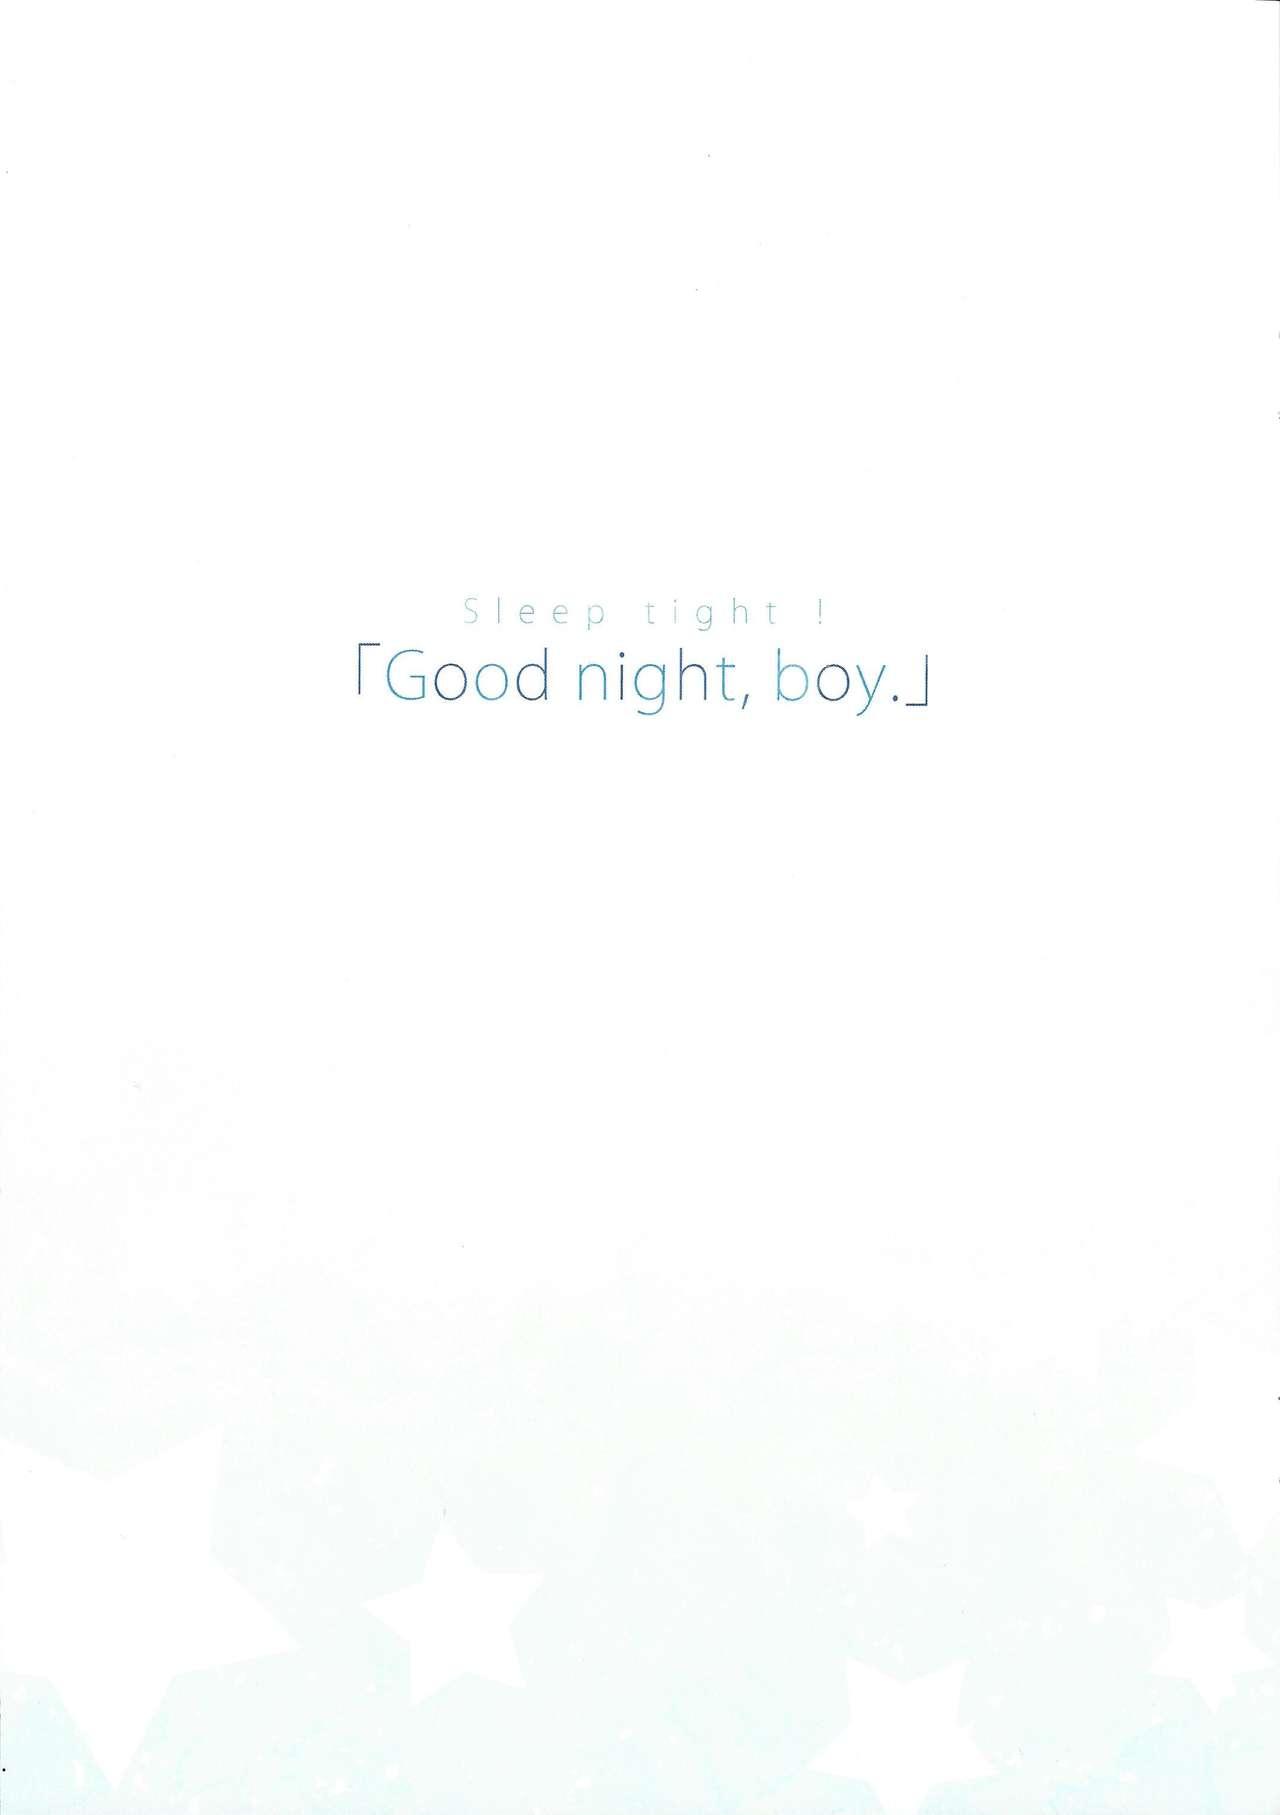 Good night, boy 2